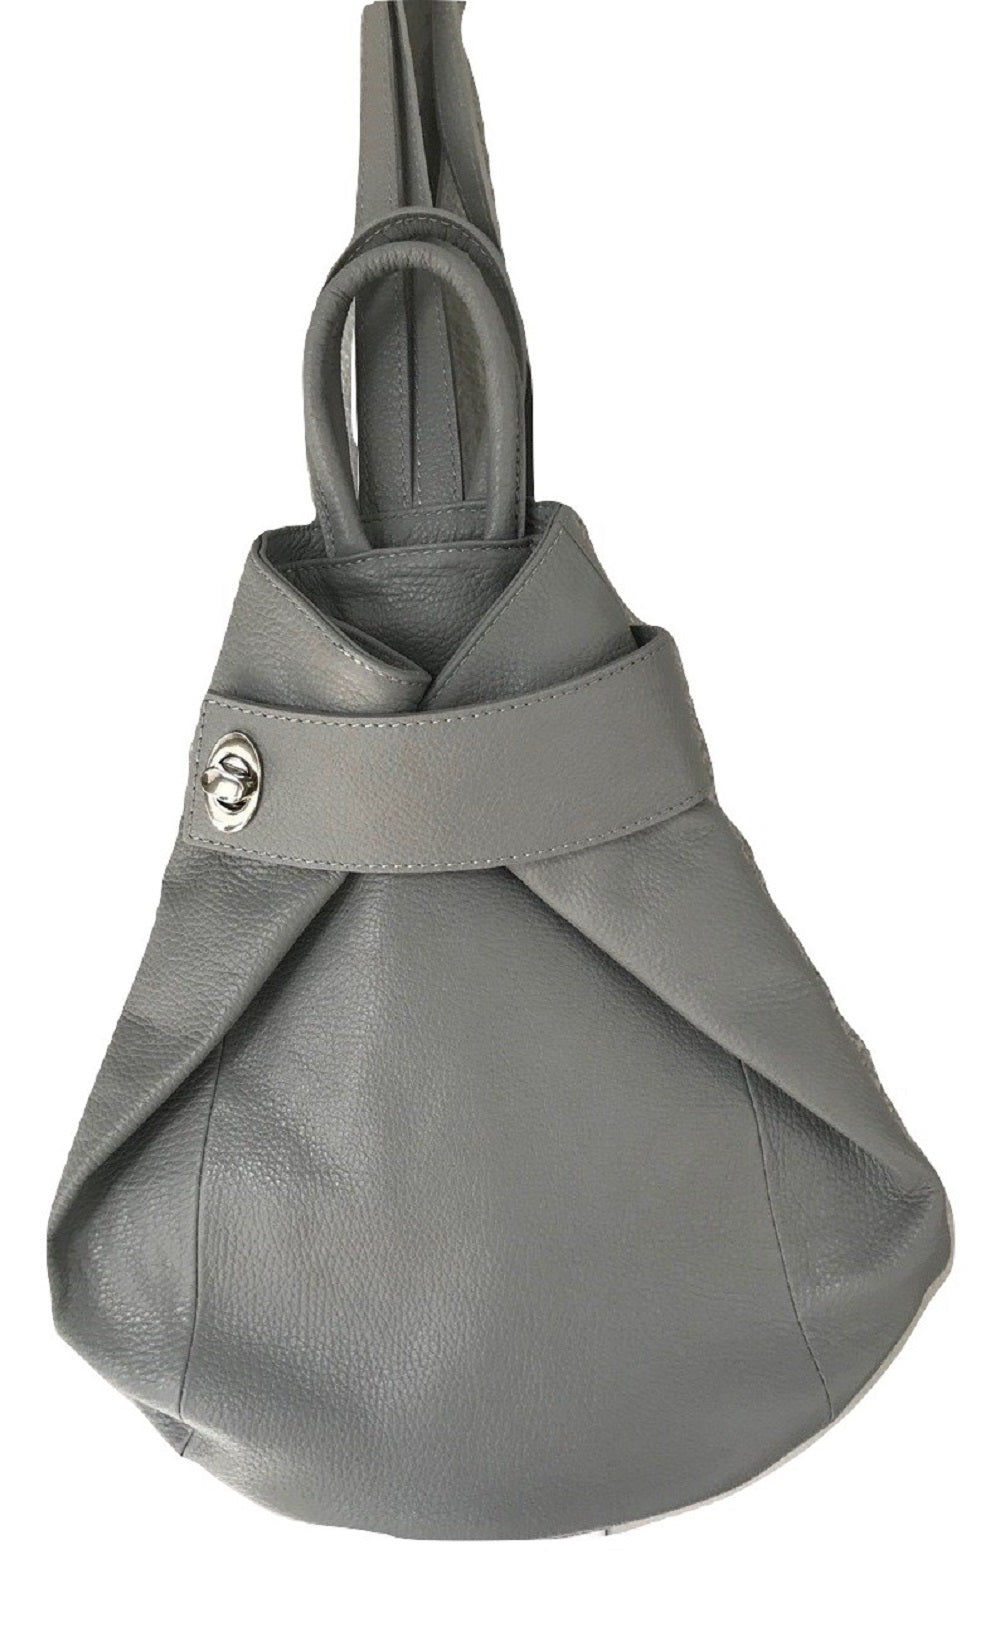 LaGaksta Stella Convertible Leather Backpack Purse – Casual Travel Tot –  LaGaksta Handbags